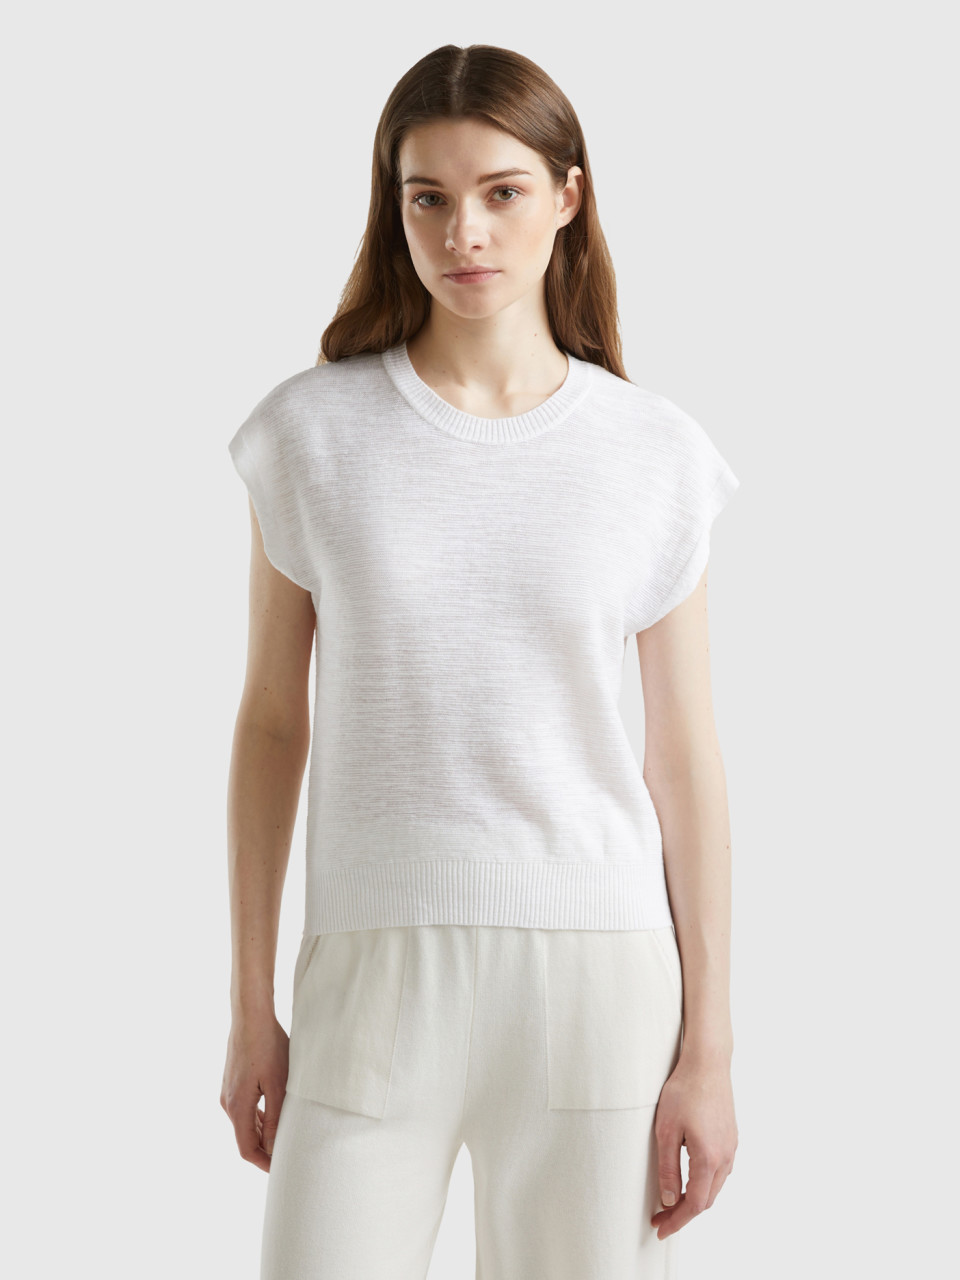 Benetton, Vest In Cotton And Linen Blend, White, Women